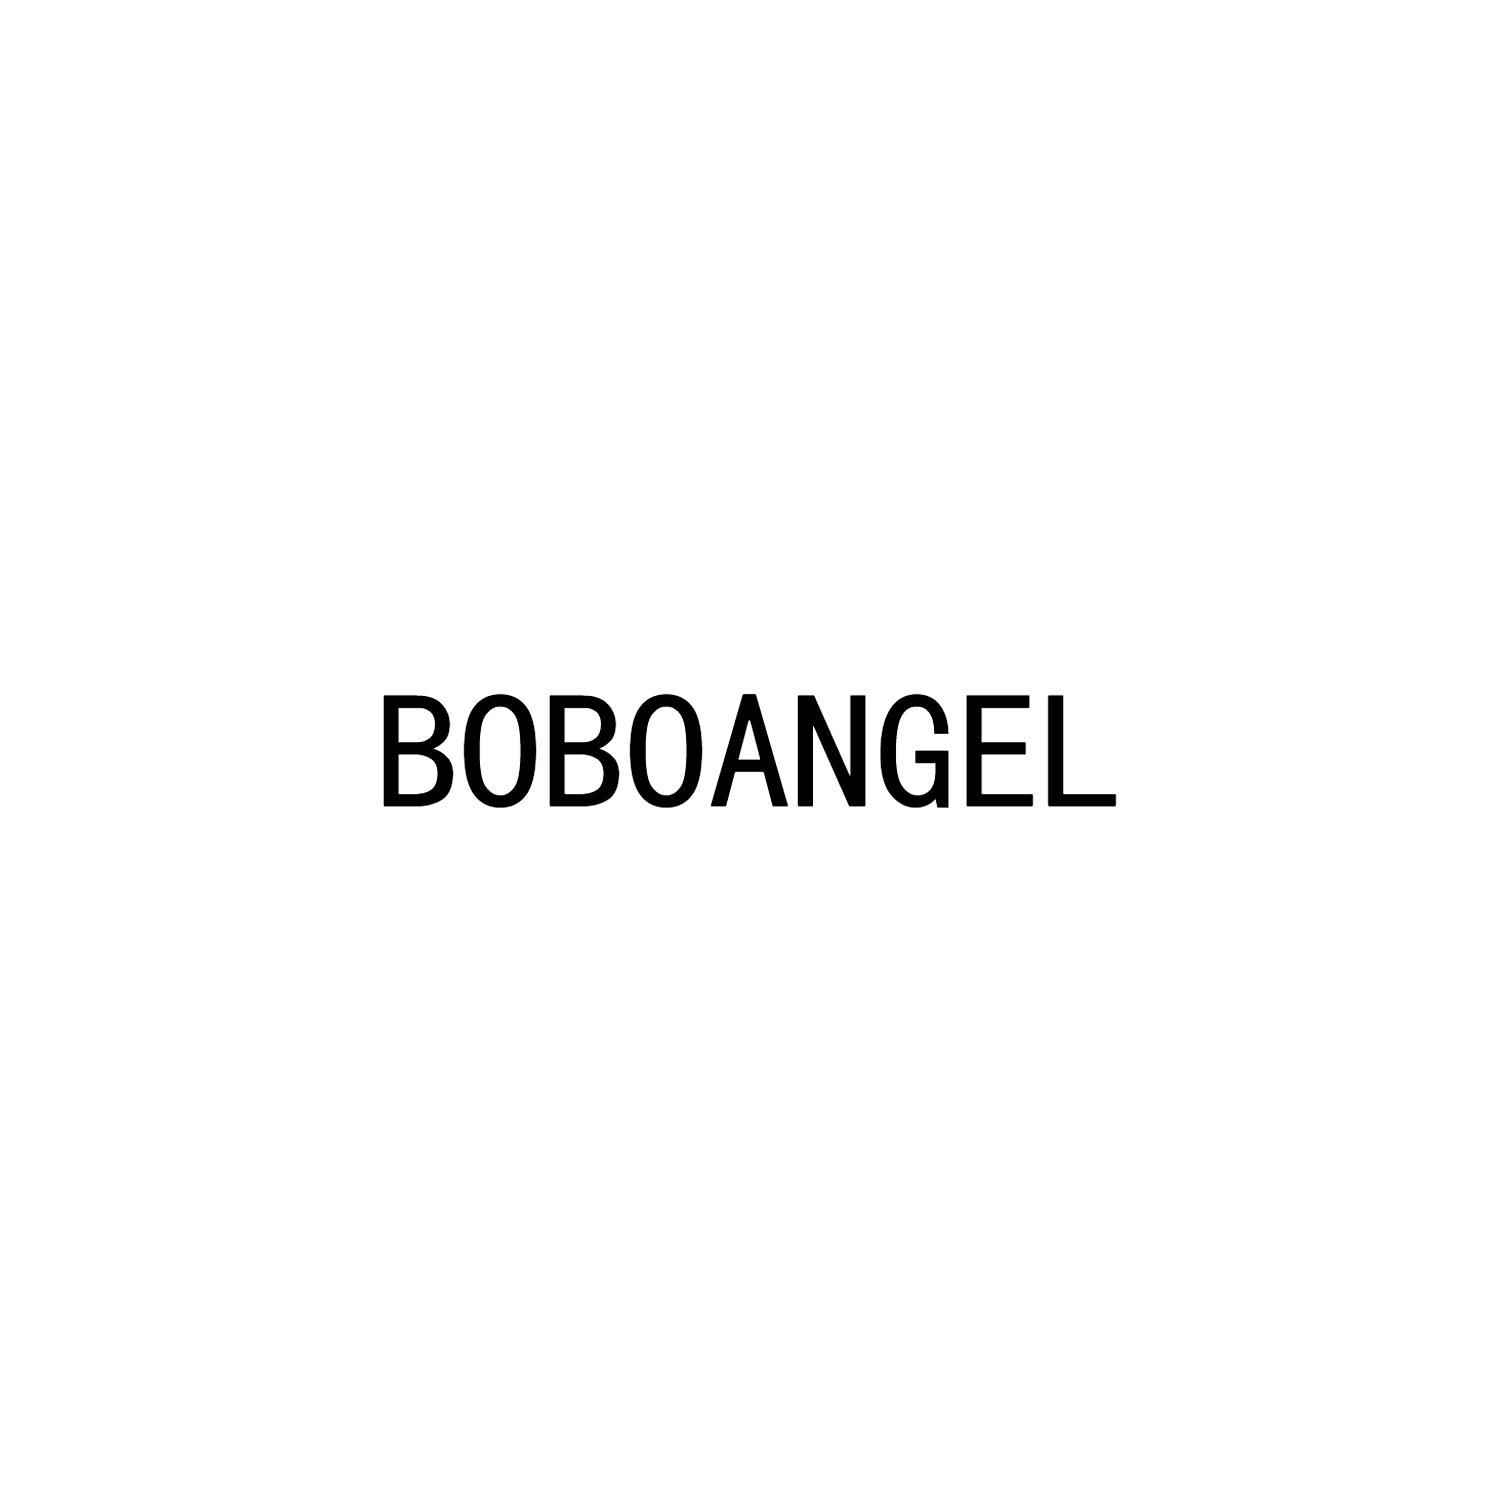 BOBOANGEL